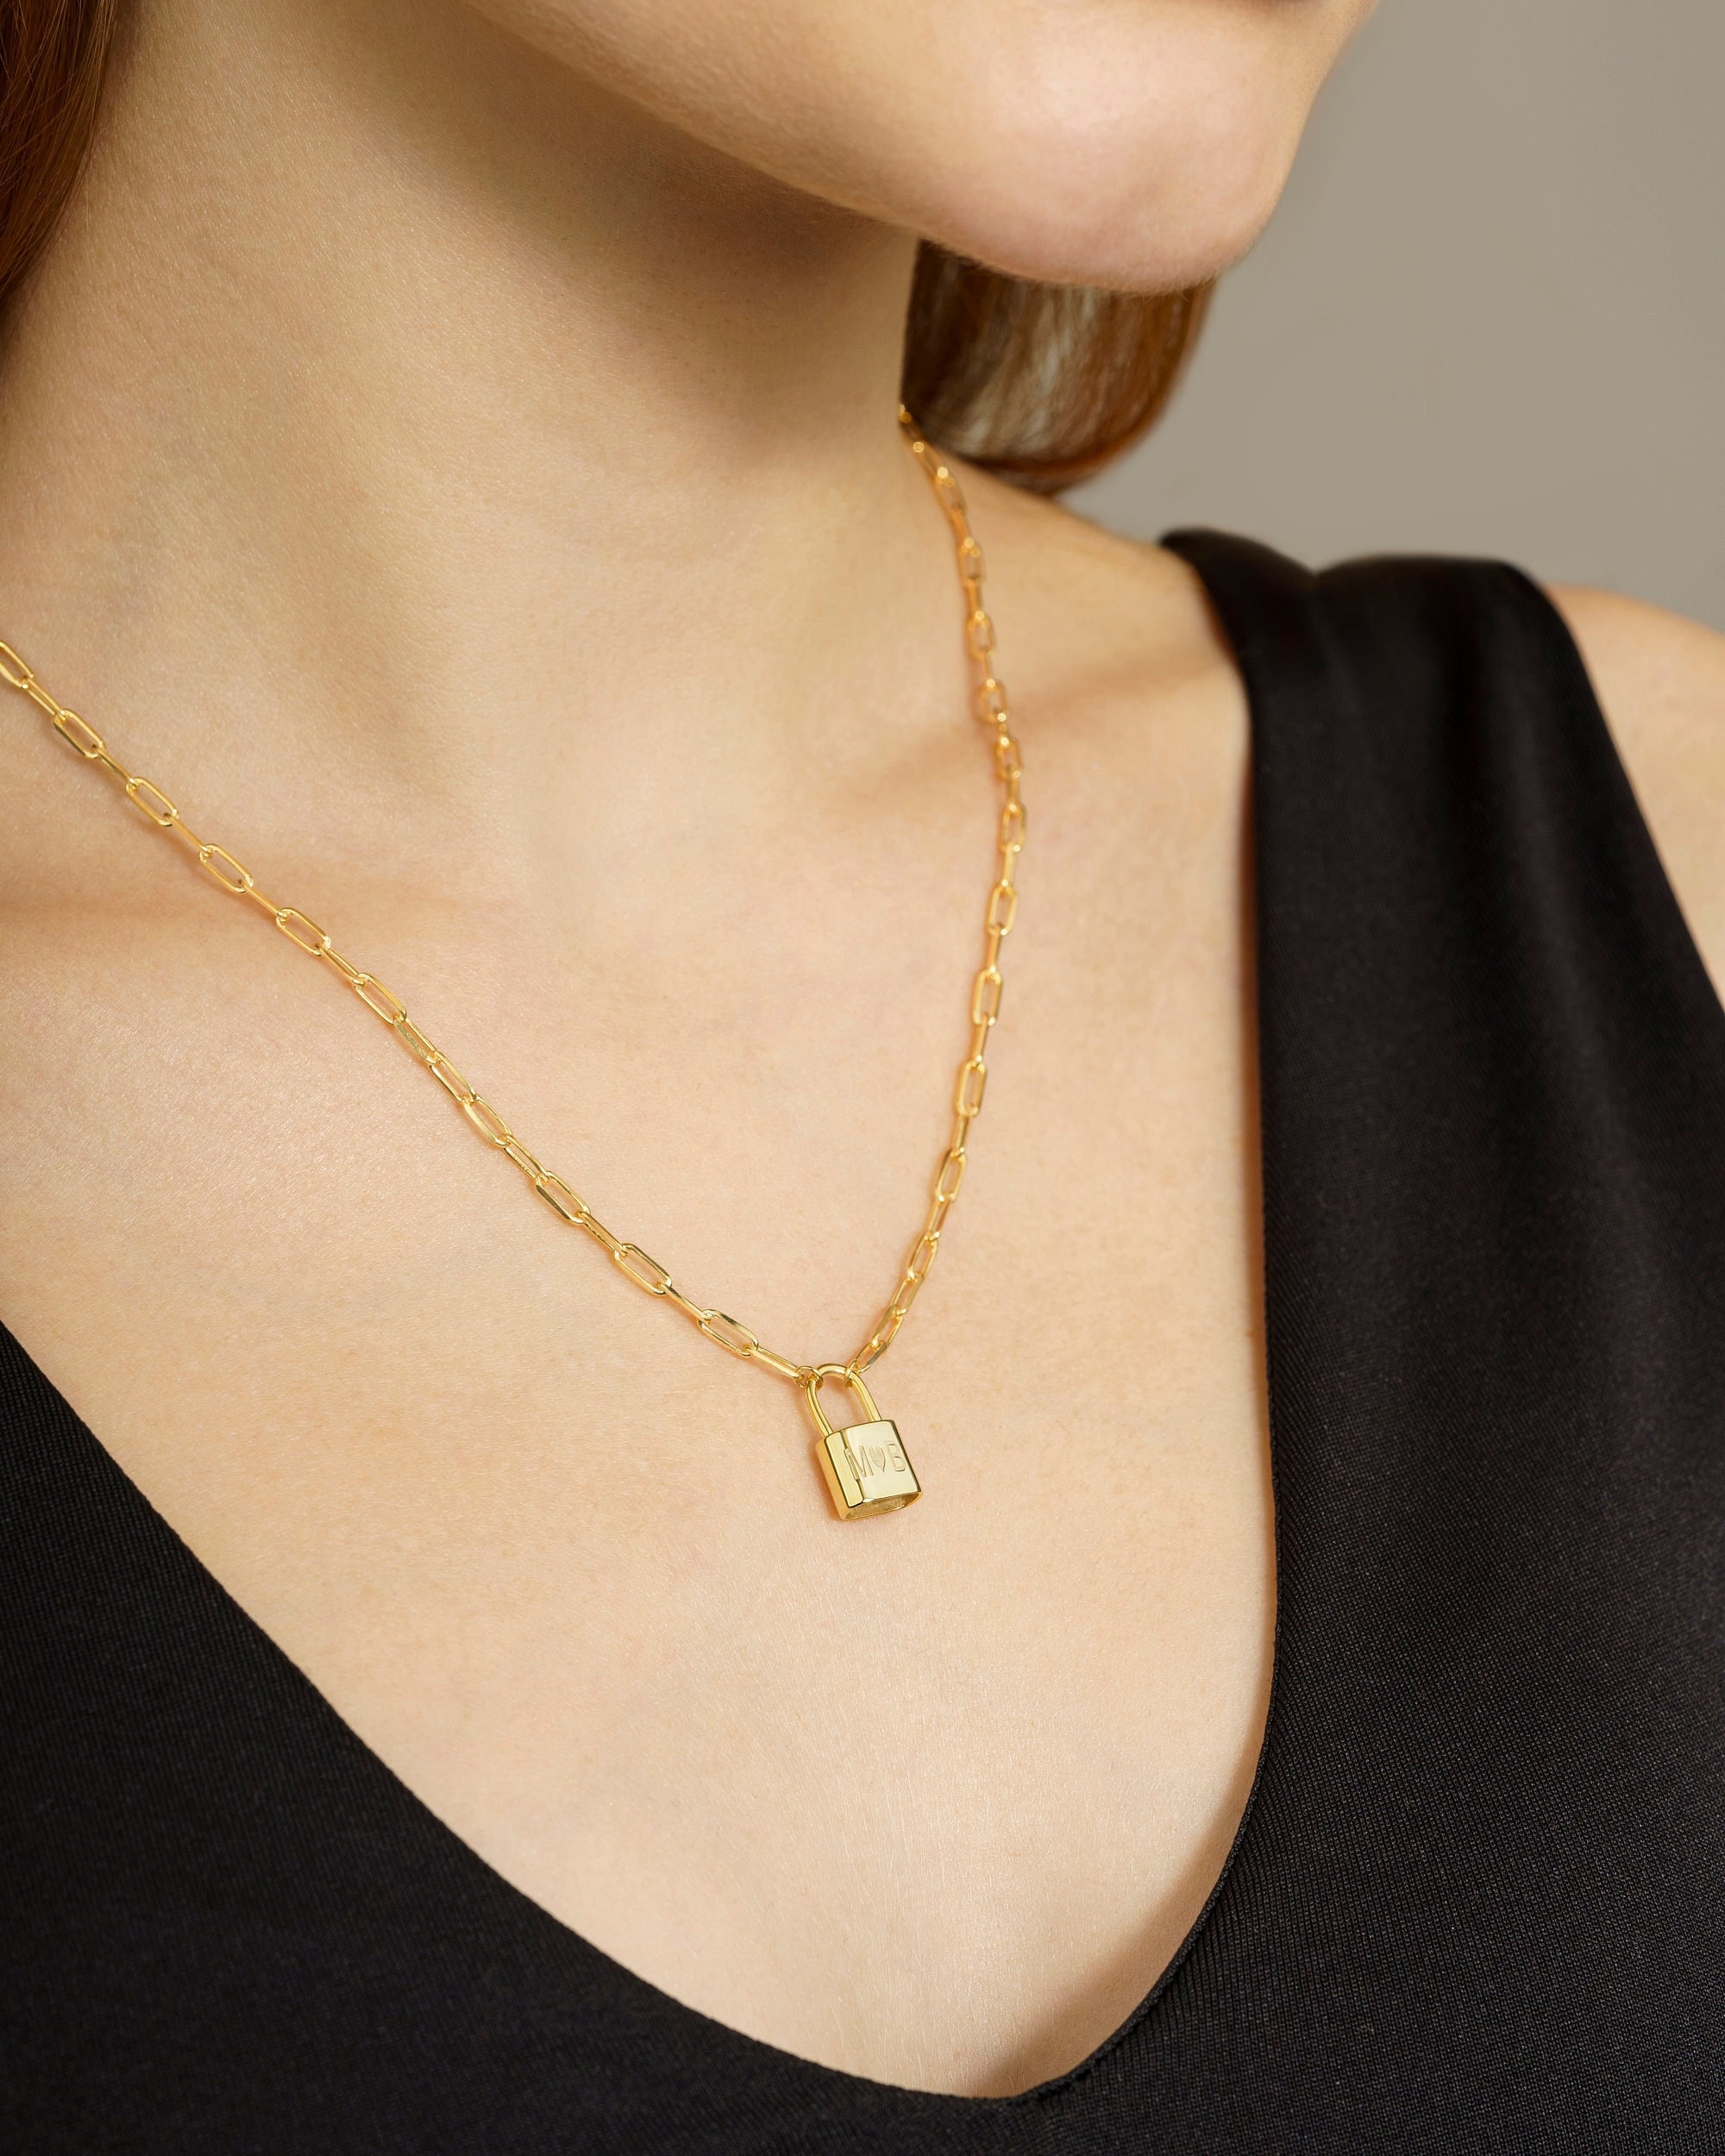  Trjgtas Women's Pendant Necklace Lock Chain Jewelry